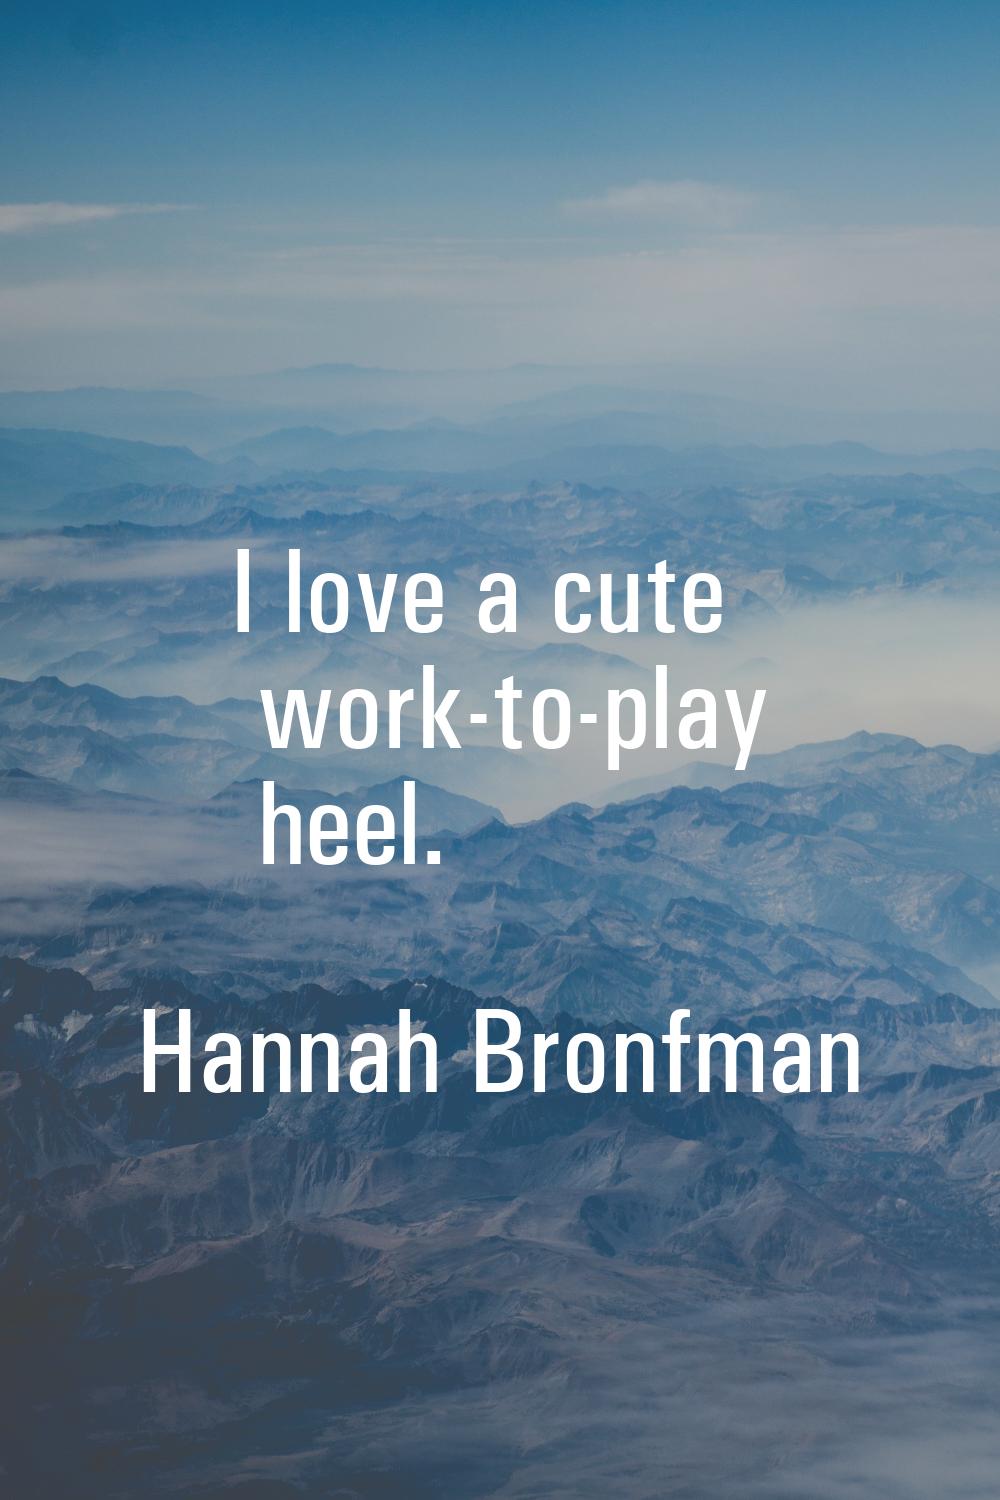 I love a cute work-to-play heel.